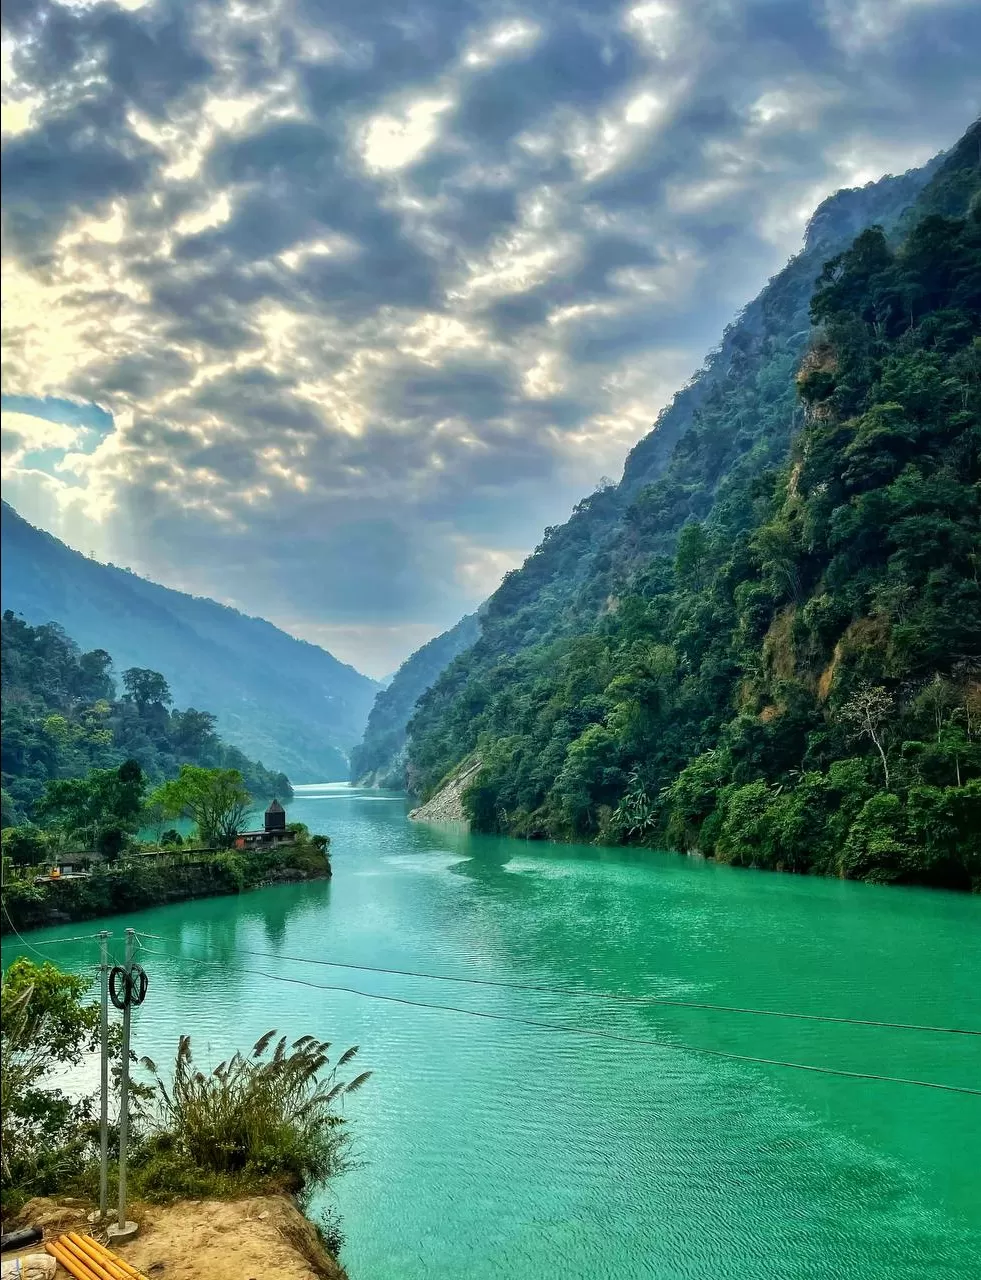 Photo of Teesta River By aman sadique